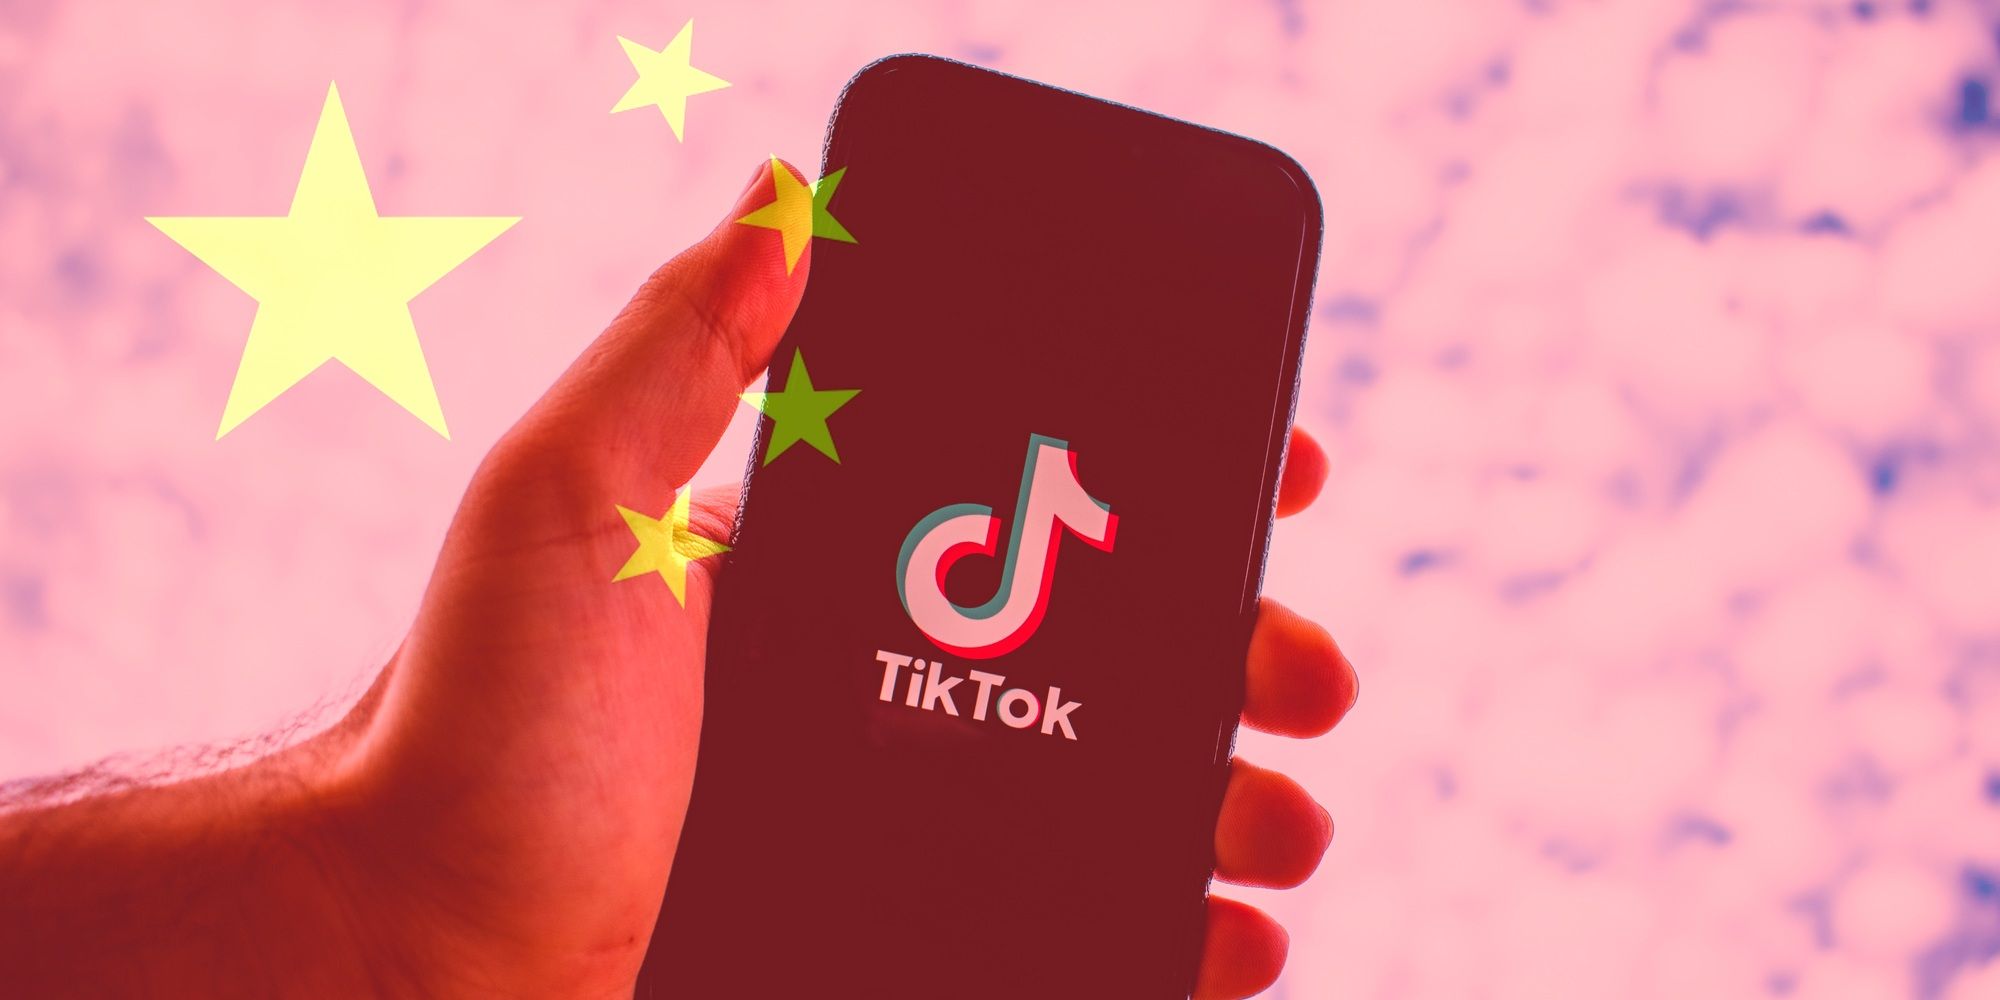 China Version of TikTok Imposes 40 Minute Time Limit